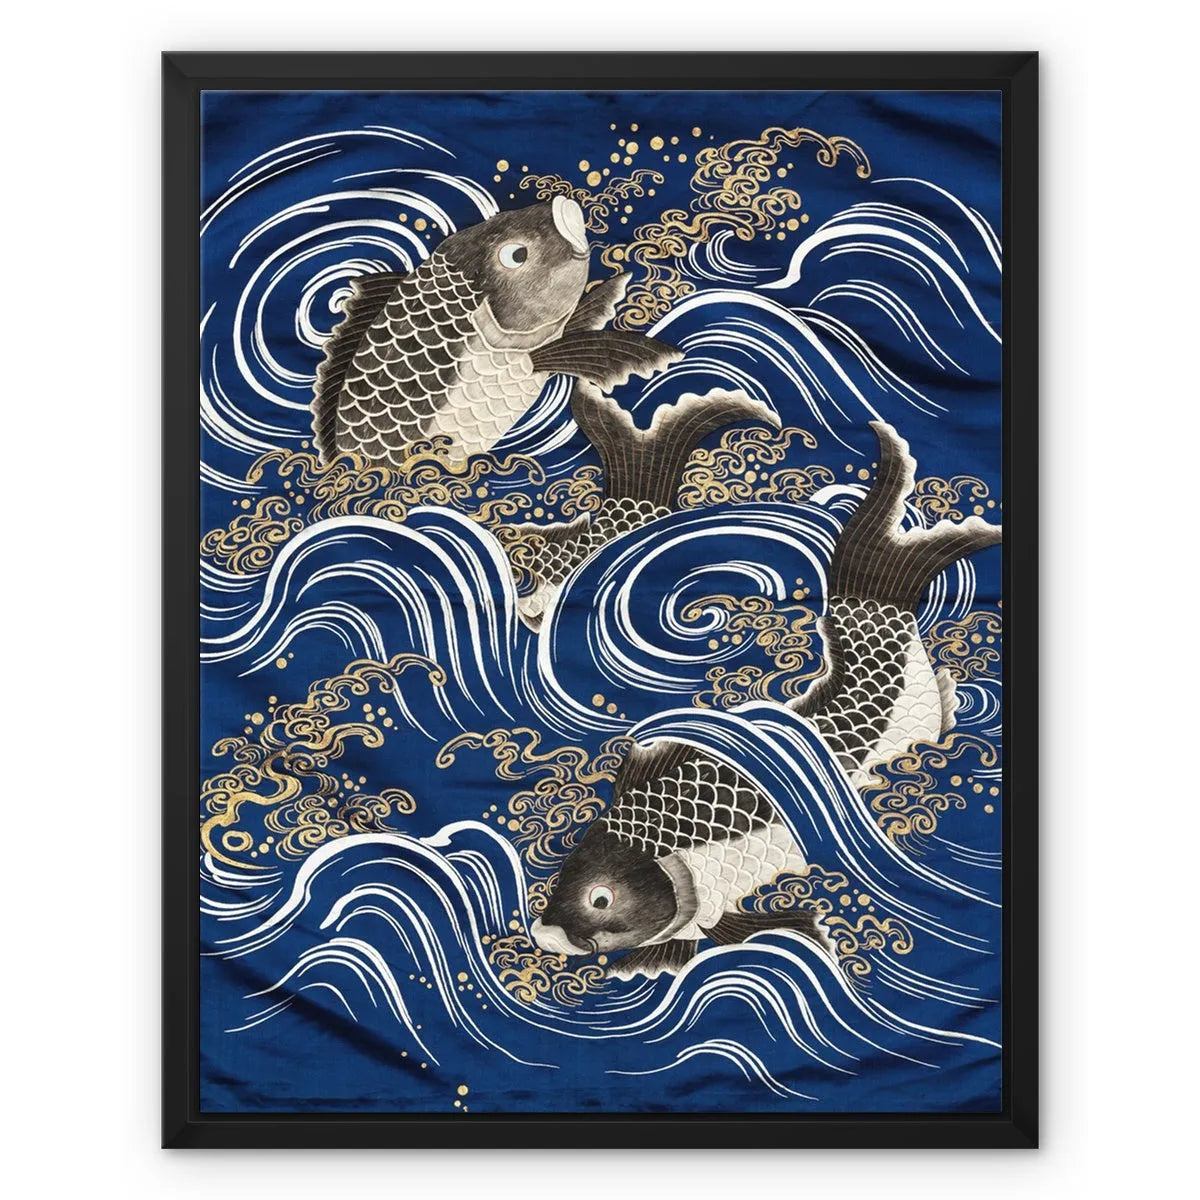 Fukusa + Carp In Waves - Meiji Period Framed Canvas - 16’x20’ - Posters Prints & Visual Artwork - Aesthetic Art